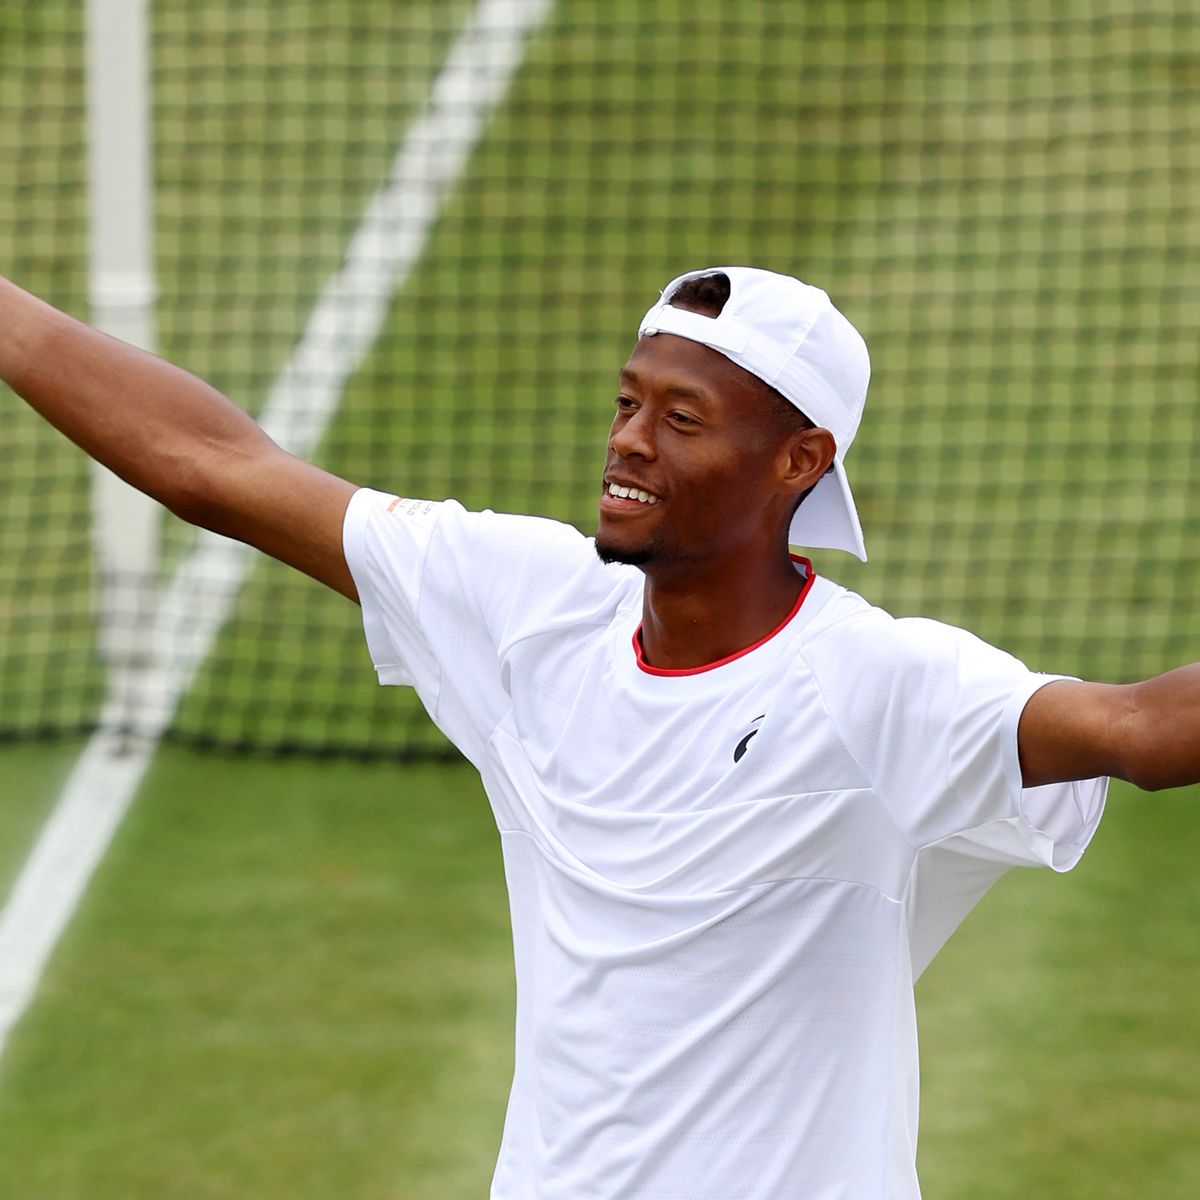 Atlanta native Eubanks stuns Tsitsipas at Wimbledon to reach his